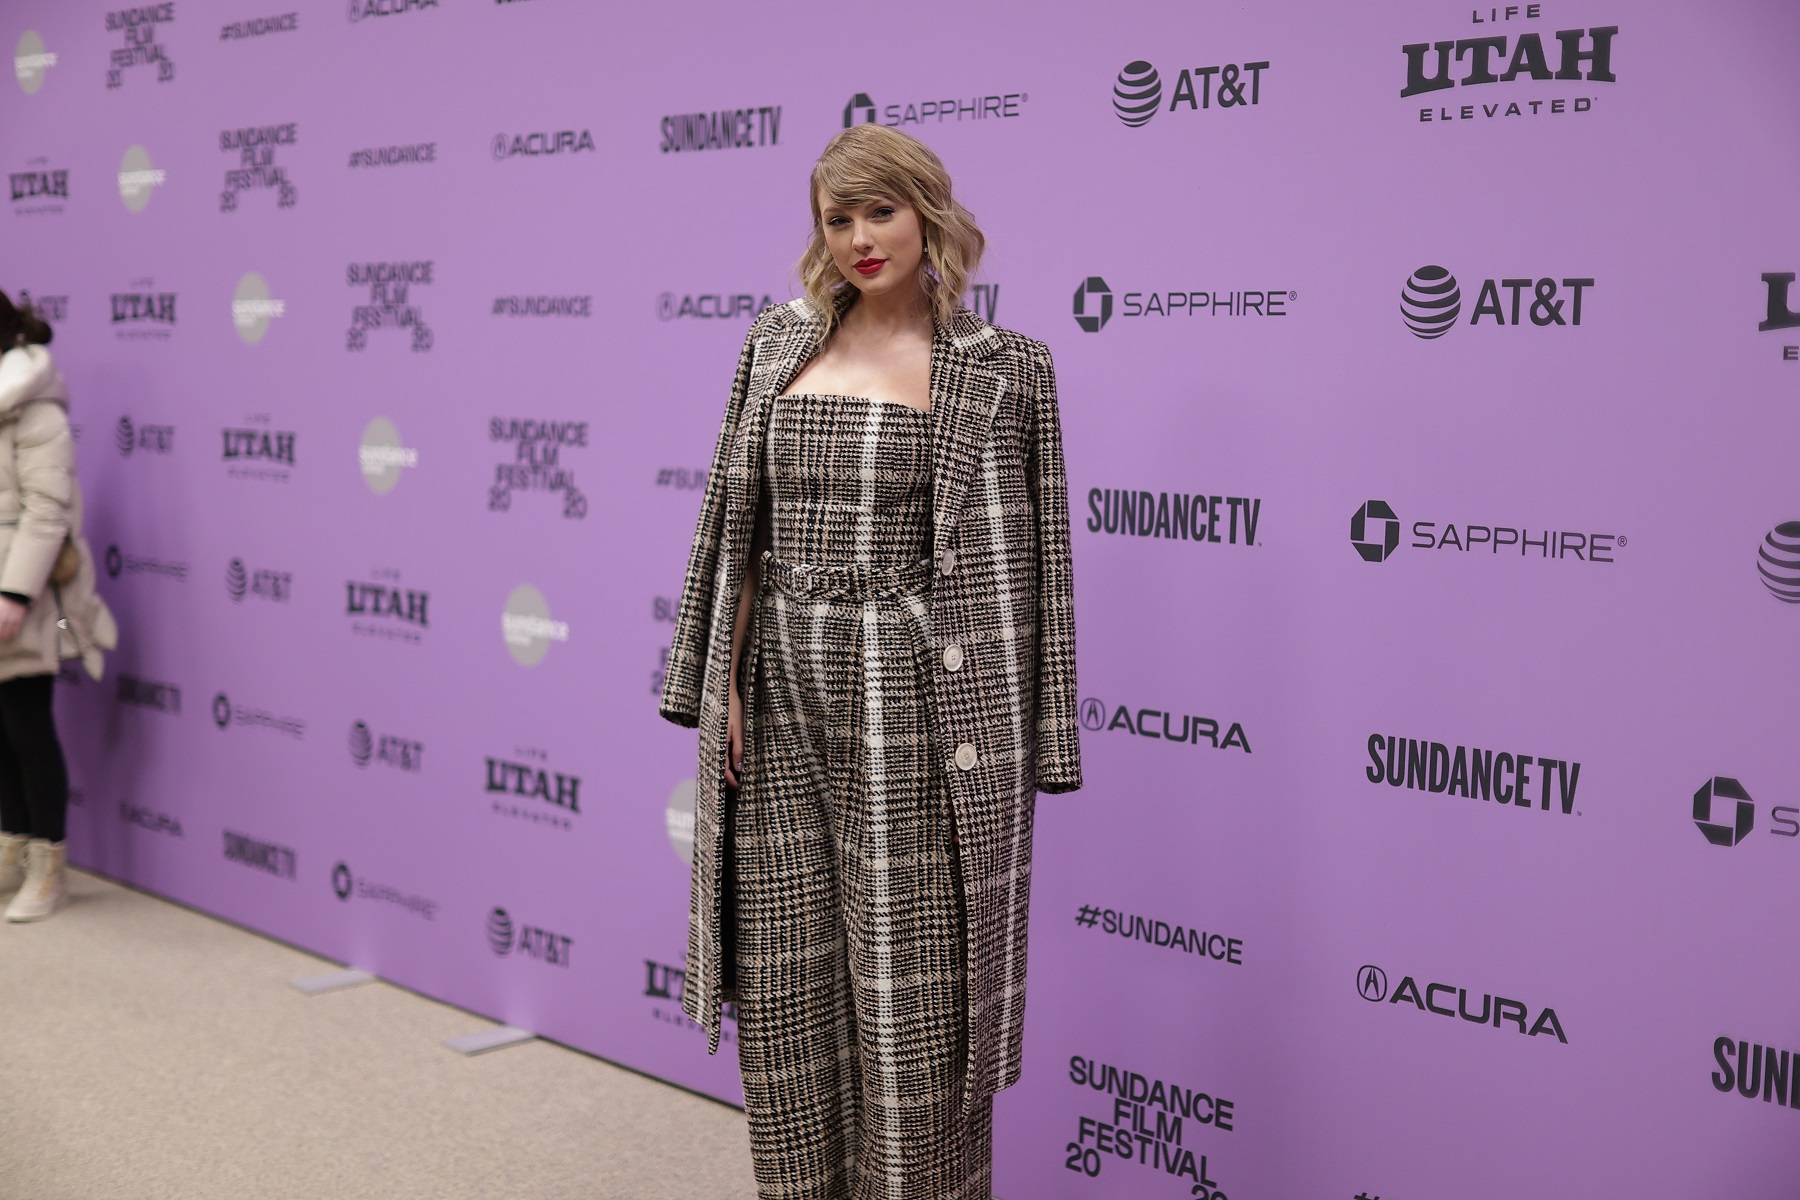 PARK CITY, UTAH - JANUARY 23: Taylor Swift attends the 2020 Sundance Film Festival - 